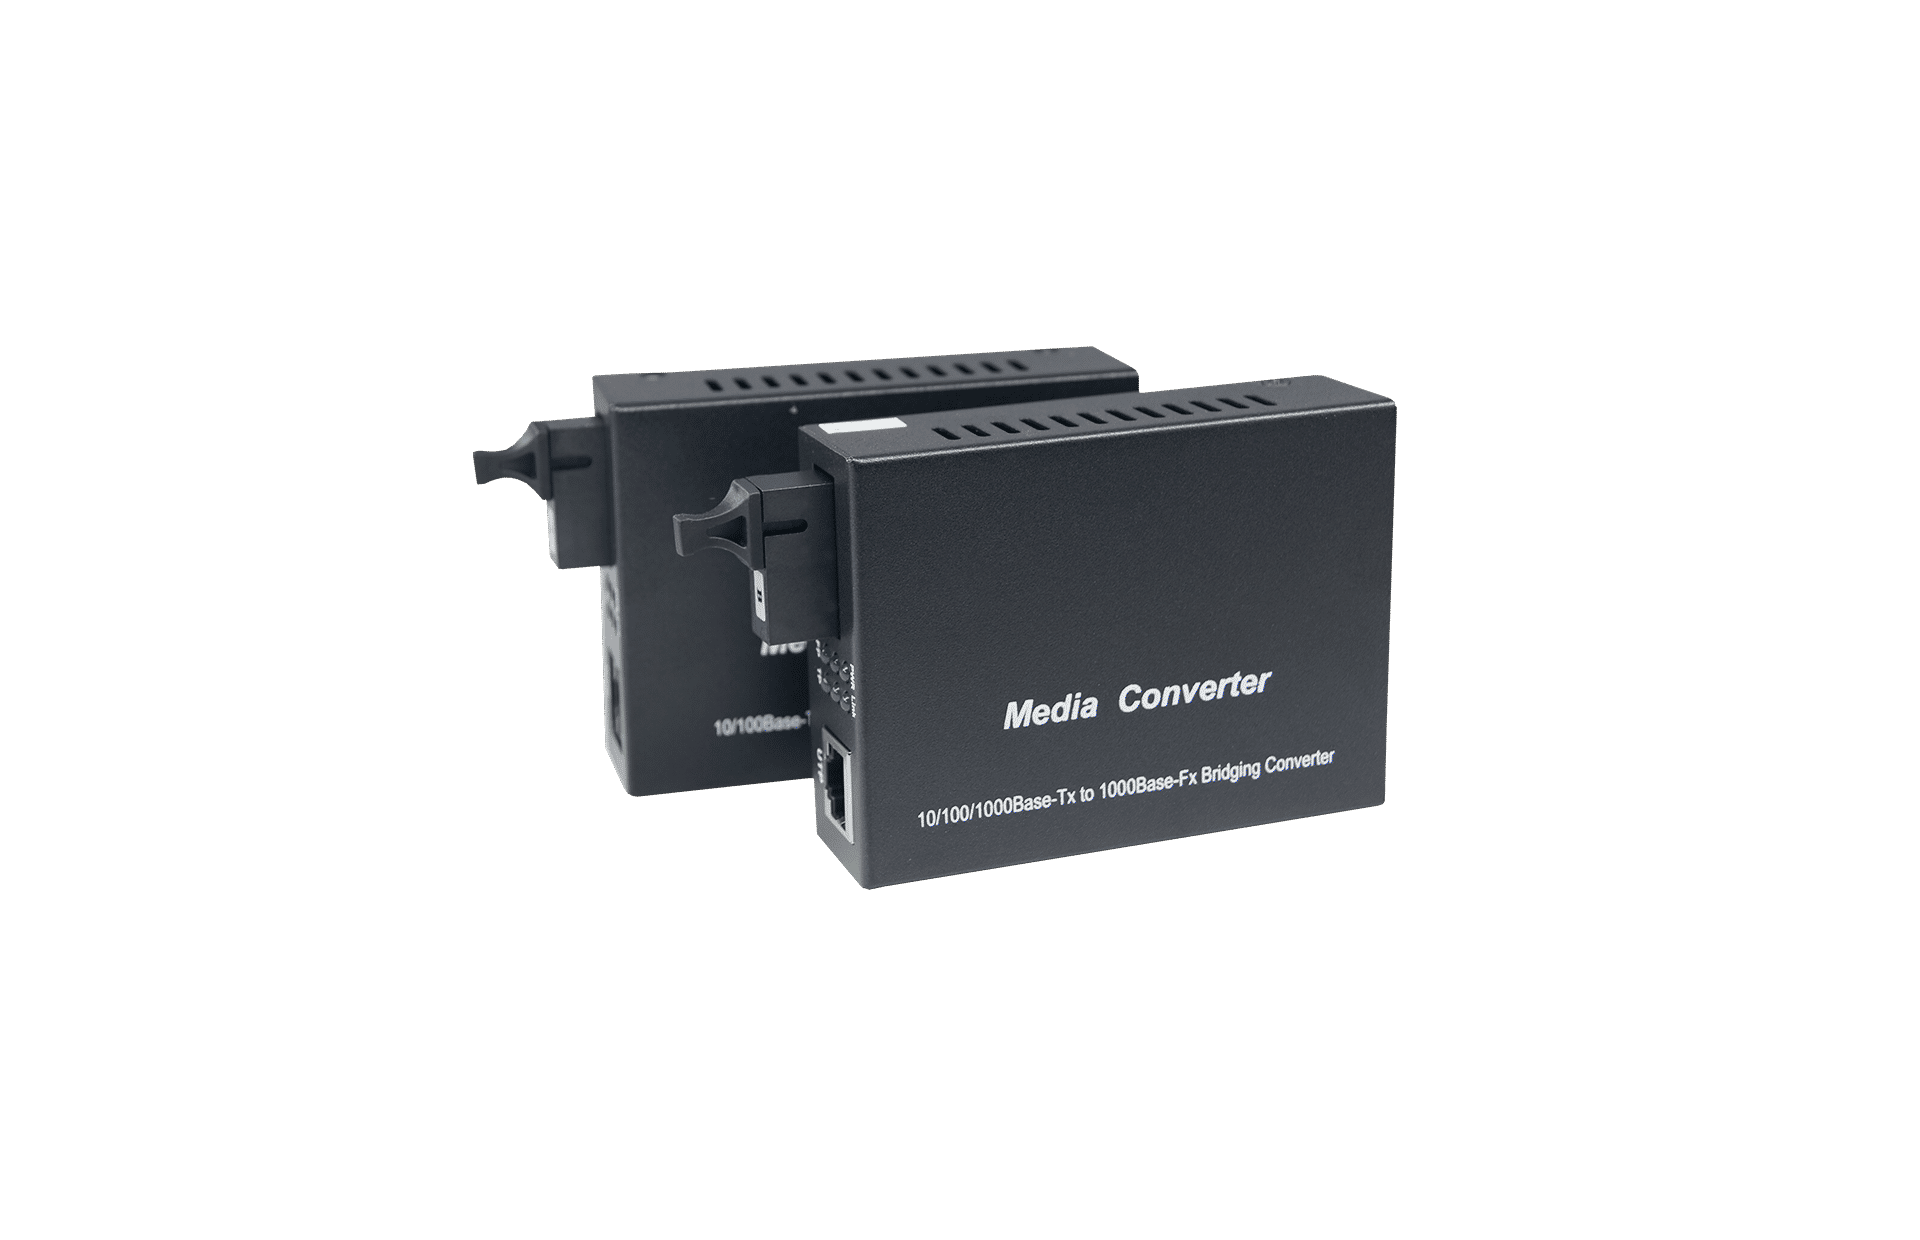 10/100/1000BASE-T to 1000BASE-SX Gigabit PoE Media Converter